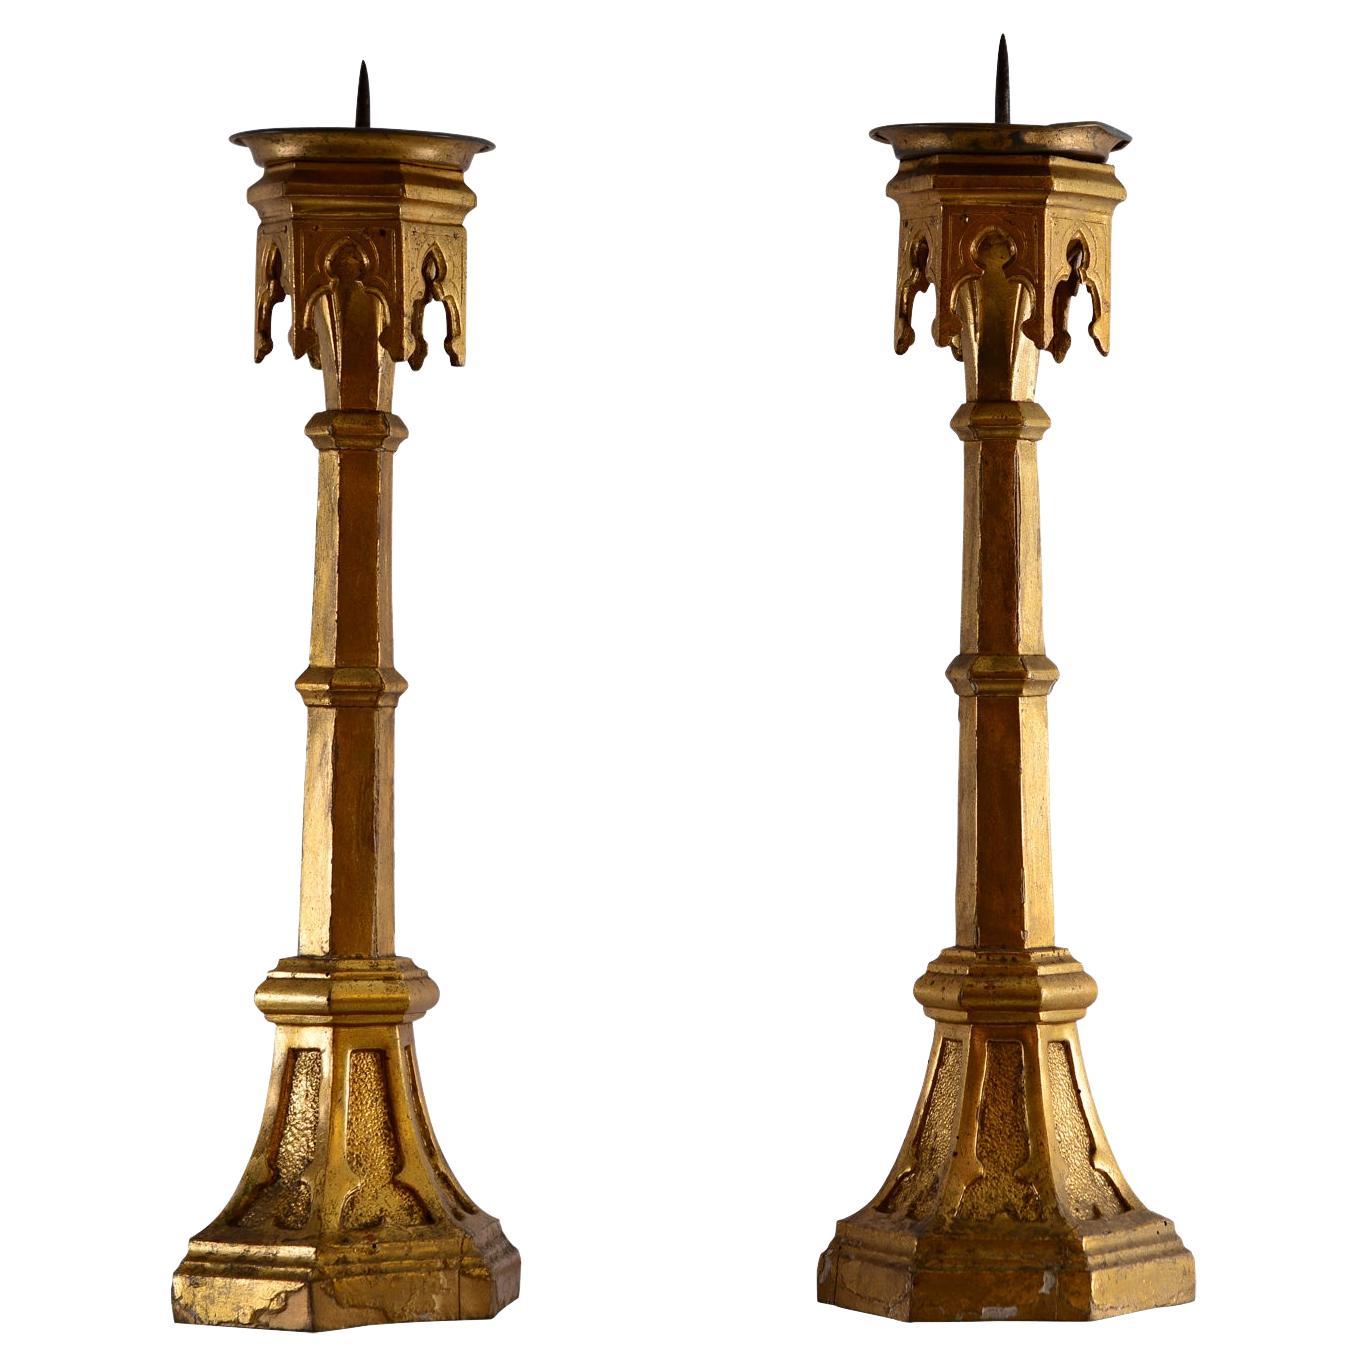 Original Gothic Style 1860 Candlesticks 19th Century Emperor of House Habsburg